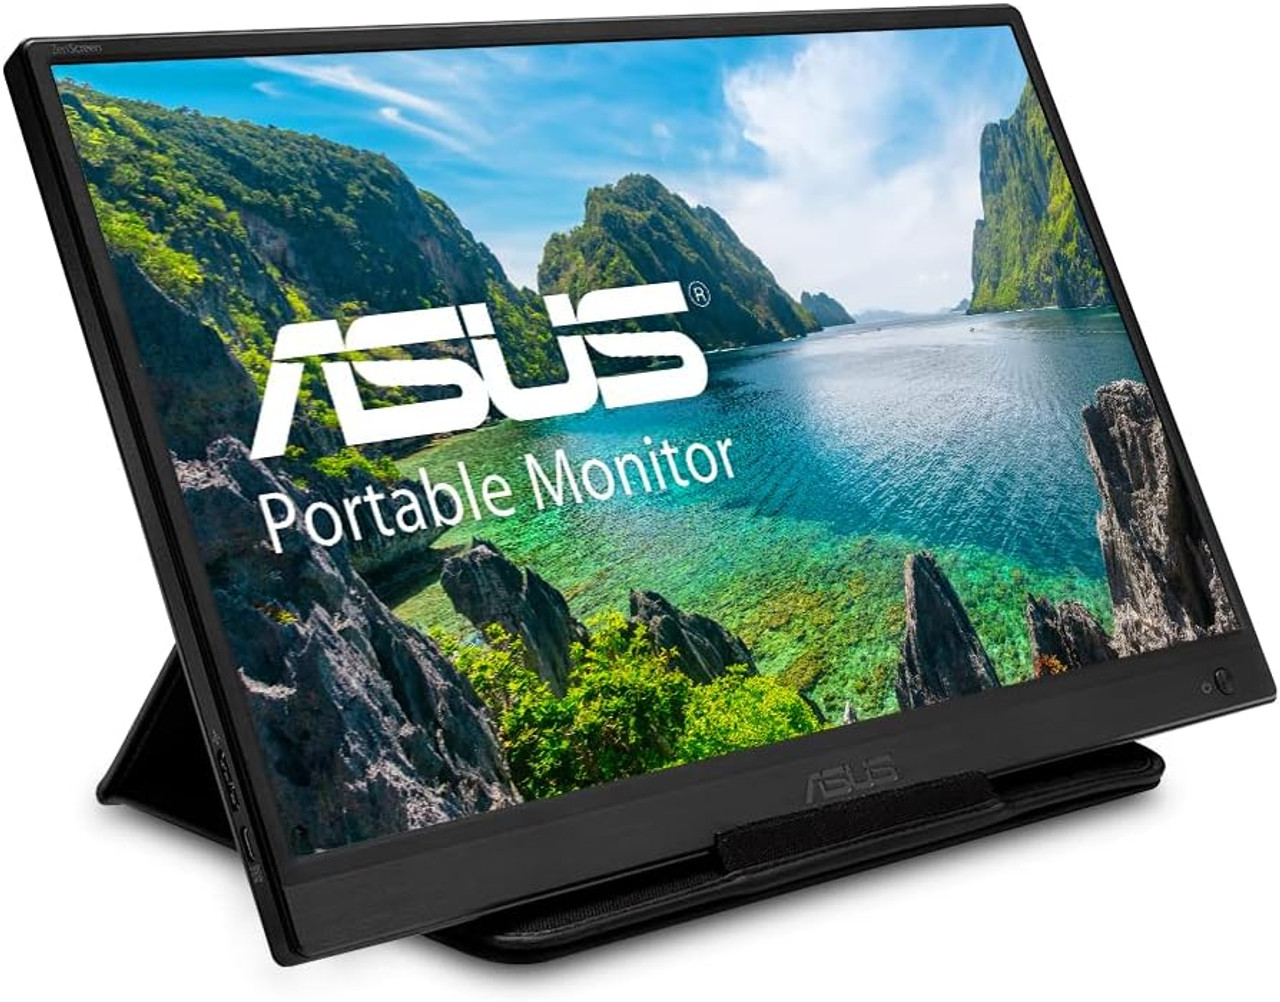 ASUS ZenScreen 15.6” Portable USB Monitor, MB165B, AYOUB COMPUTERS